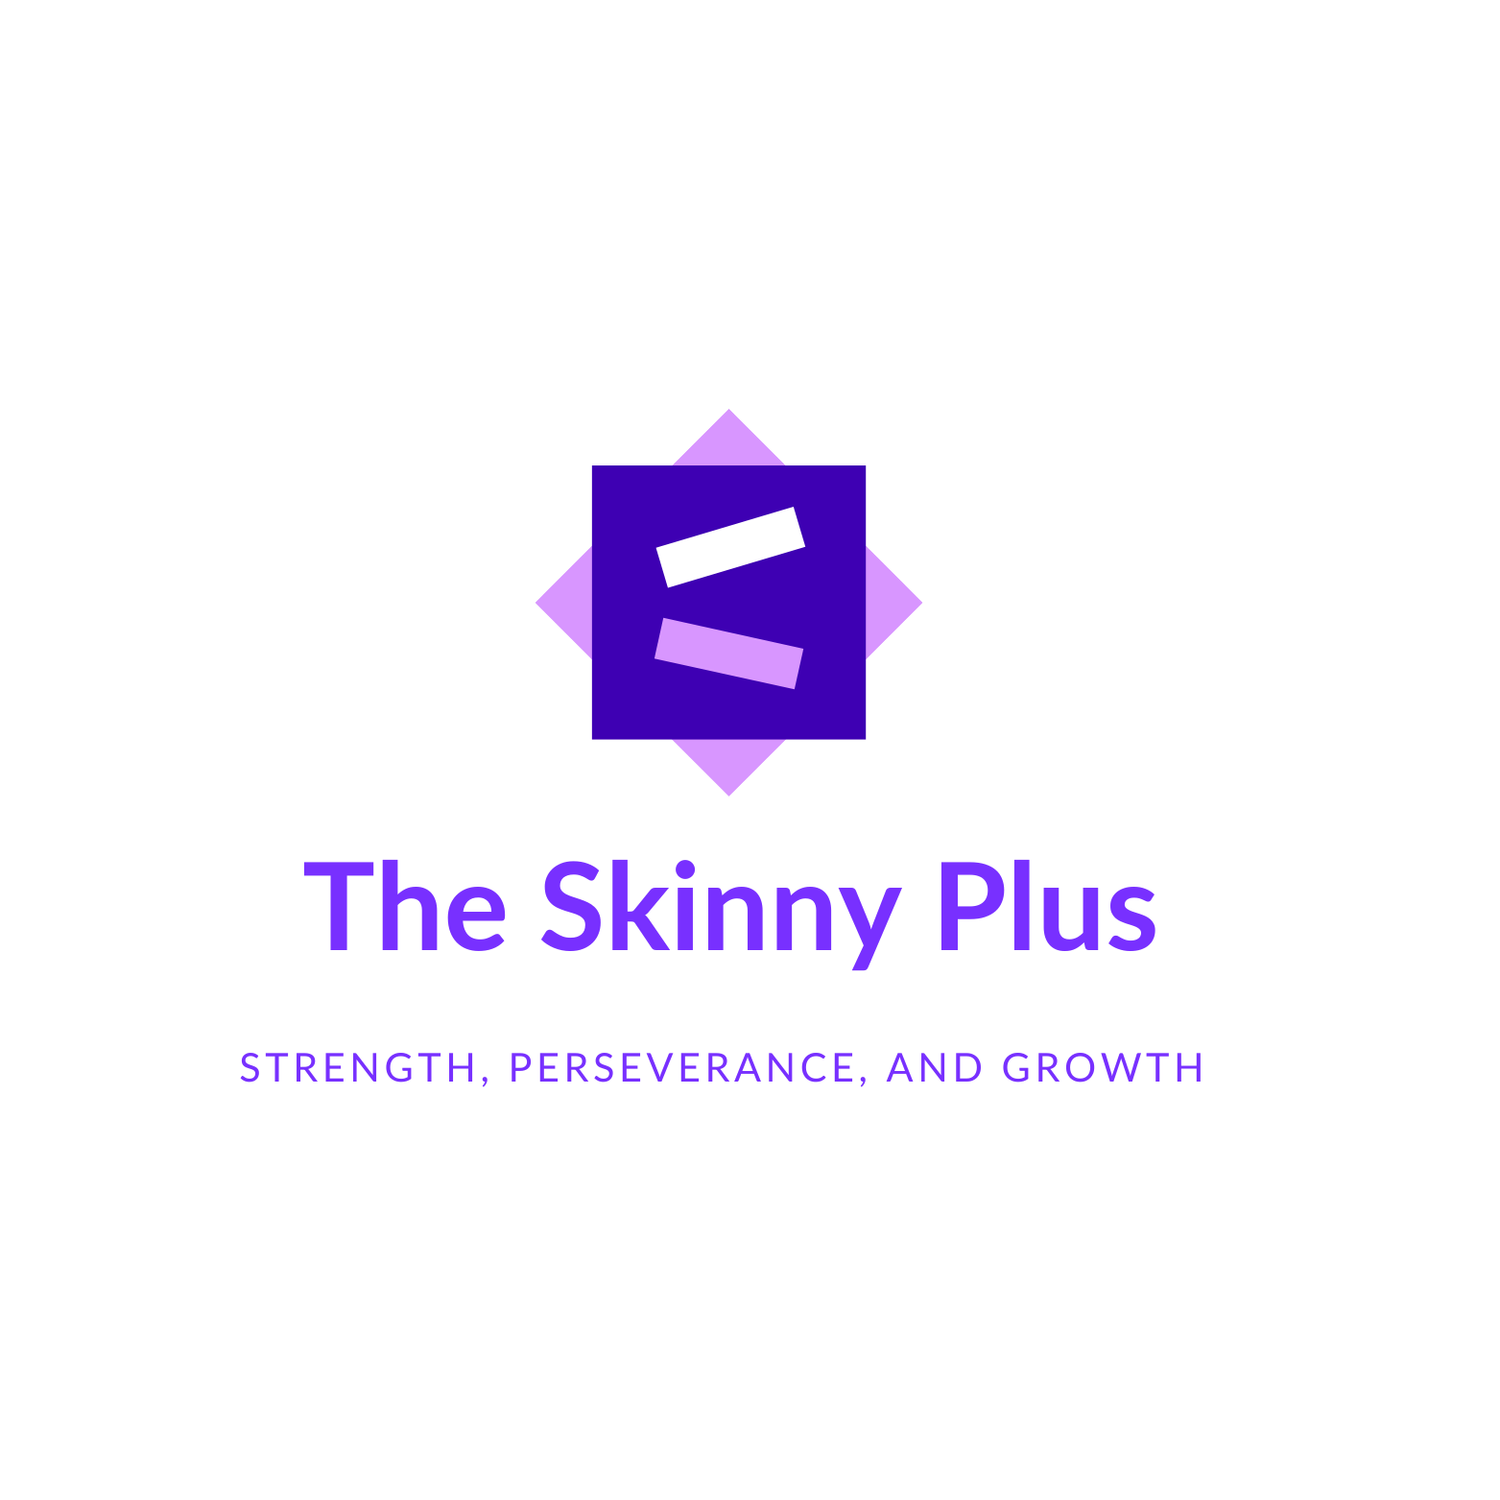 The Skinny Plus